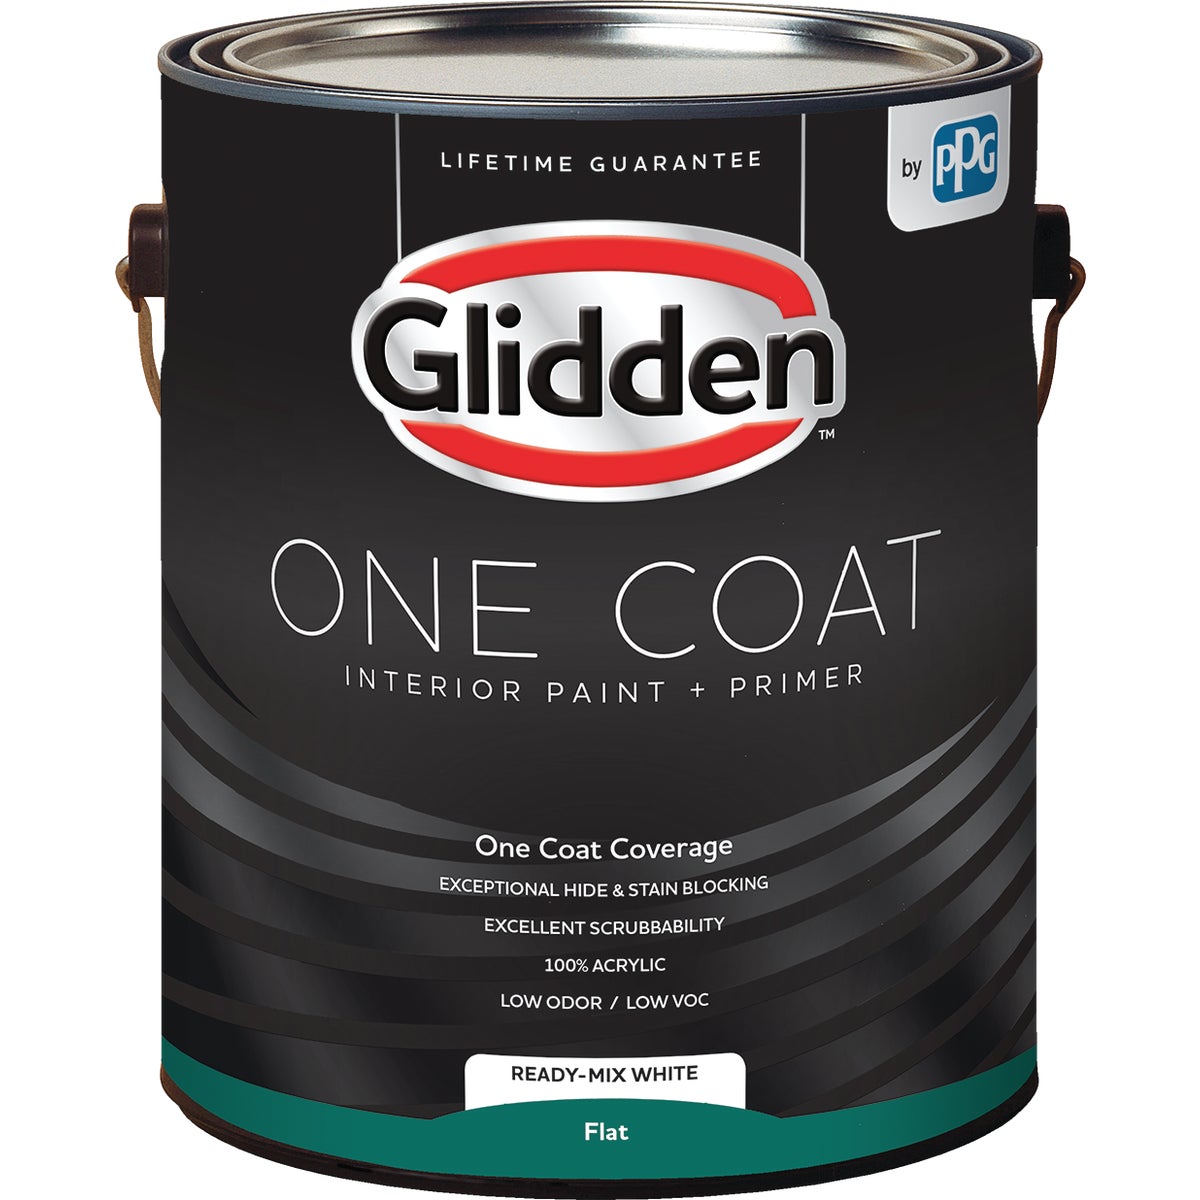 Glidden One Coat Interior Paint + Primer Flat Ready Mix White 1 Gallon